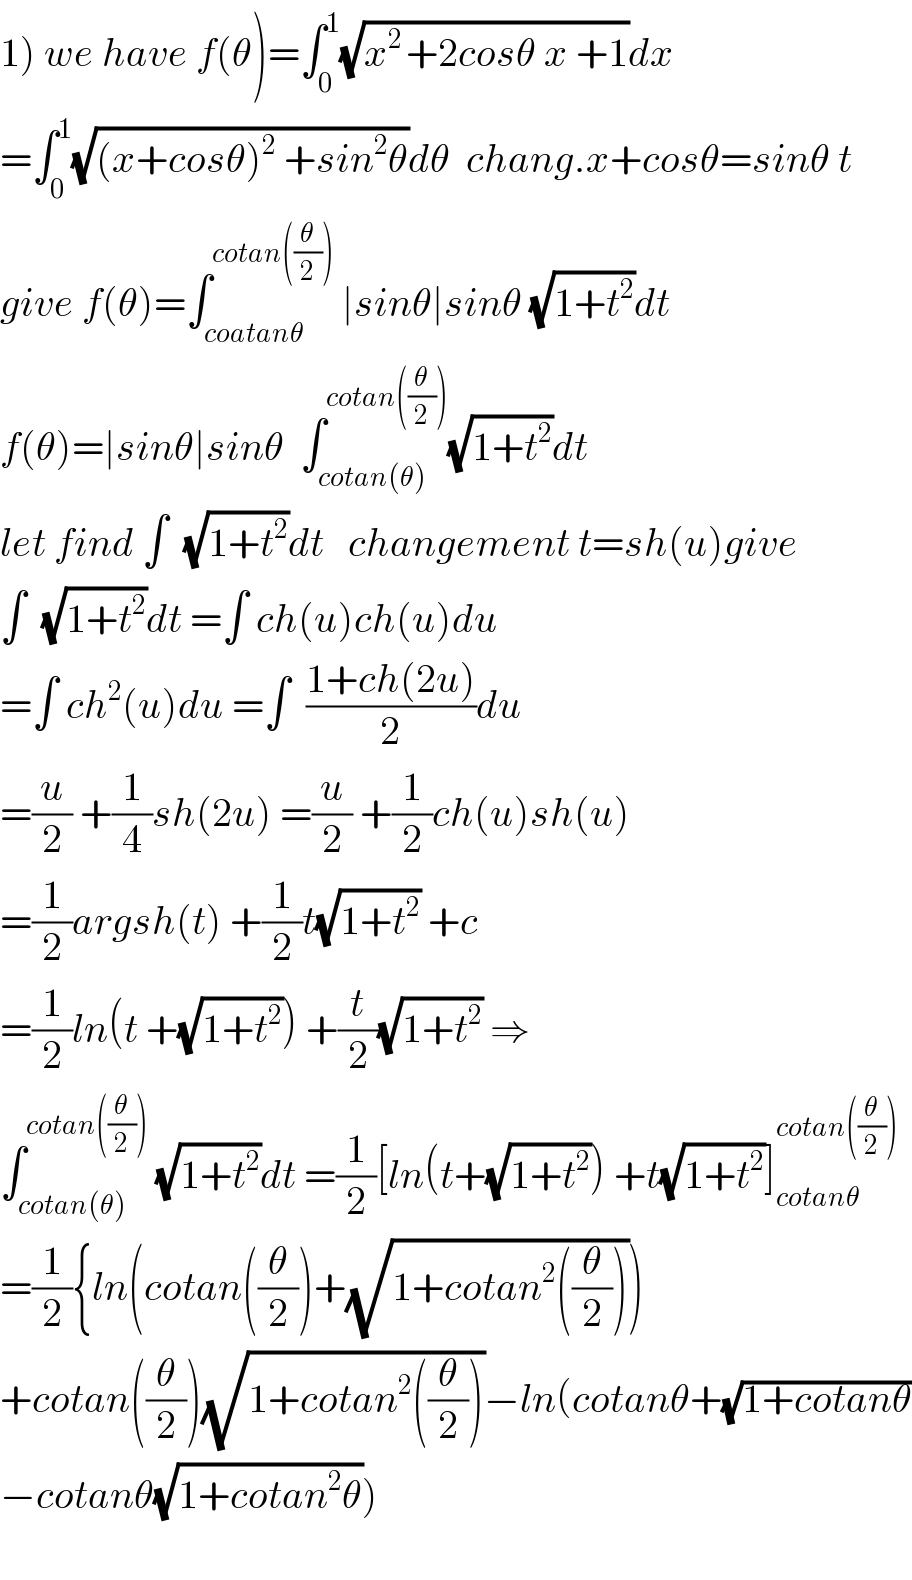 1) we have f(θ)=∫_0 ^1 (√(x^(2 ) +2cosθ x +1))dx  =∫_0 ^1 (√((x+cosθ)^2  +sin^2 θ))dθ  chang.x+cosθ=sinθ t  give f(θ)=∫_(coatanθ) ^(cotan((θ/2)))  ∣sinθ∣sinθ (√(1+t^2 ))dt  f(θ)=∣sinθ∣sinθ  ∫_(cotan(θ)) ^(cotan((θ/2))) (√(1+t^2 ))dt  let find ∫  (√(1+t^2 ))dt   changement t=sh(u)give  ∫  (√(1+t^2 ))dt =∫ ch(u)ch(u)du  =∫ ch^2 (u)du =∫  ((1+ch(2u))/2)du  =(u/2) +(1/4)sh(2u) =(u/2) +(1/2)ch(u)sh(u)  =(1/2)argsh(t) +(1/2)t(√(1+t^2 )) +c  =(1/2)ln(t +(√(1+t^2 ))) +(t/2)(√(1+t^2 )) ⇒  ∫_(cotan(θ)) ^(cotan((θ/2)))  (√(1+t^2 ))dt =(1/2)[ln(t+(√(1+t^2 ))) +t(√(1+t^2 ))]_(cotanθ) ^(cotan((θ/2)))   =(1/2){ln(cotan((θ/2))+(√(1+cotan^2 ((θ/2)))))  +cotan((θ/2))(√(1+cotan^2 ((θ/2))))−ln(cotanθ+(√(1+cotanθ))  −cotanθ(√(1+cotan^2 θ)))    